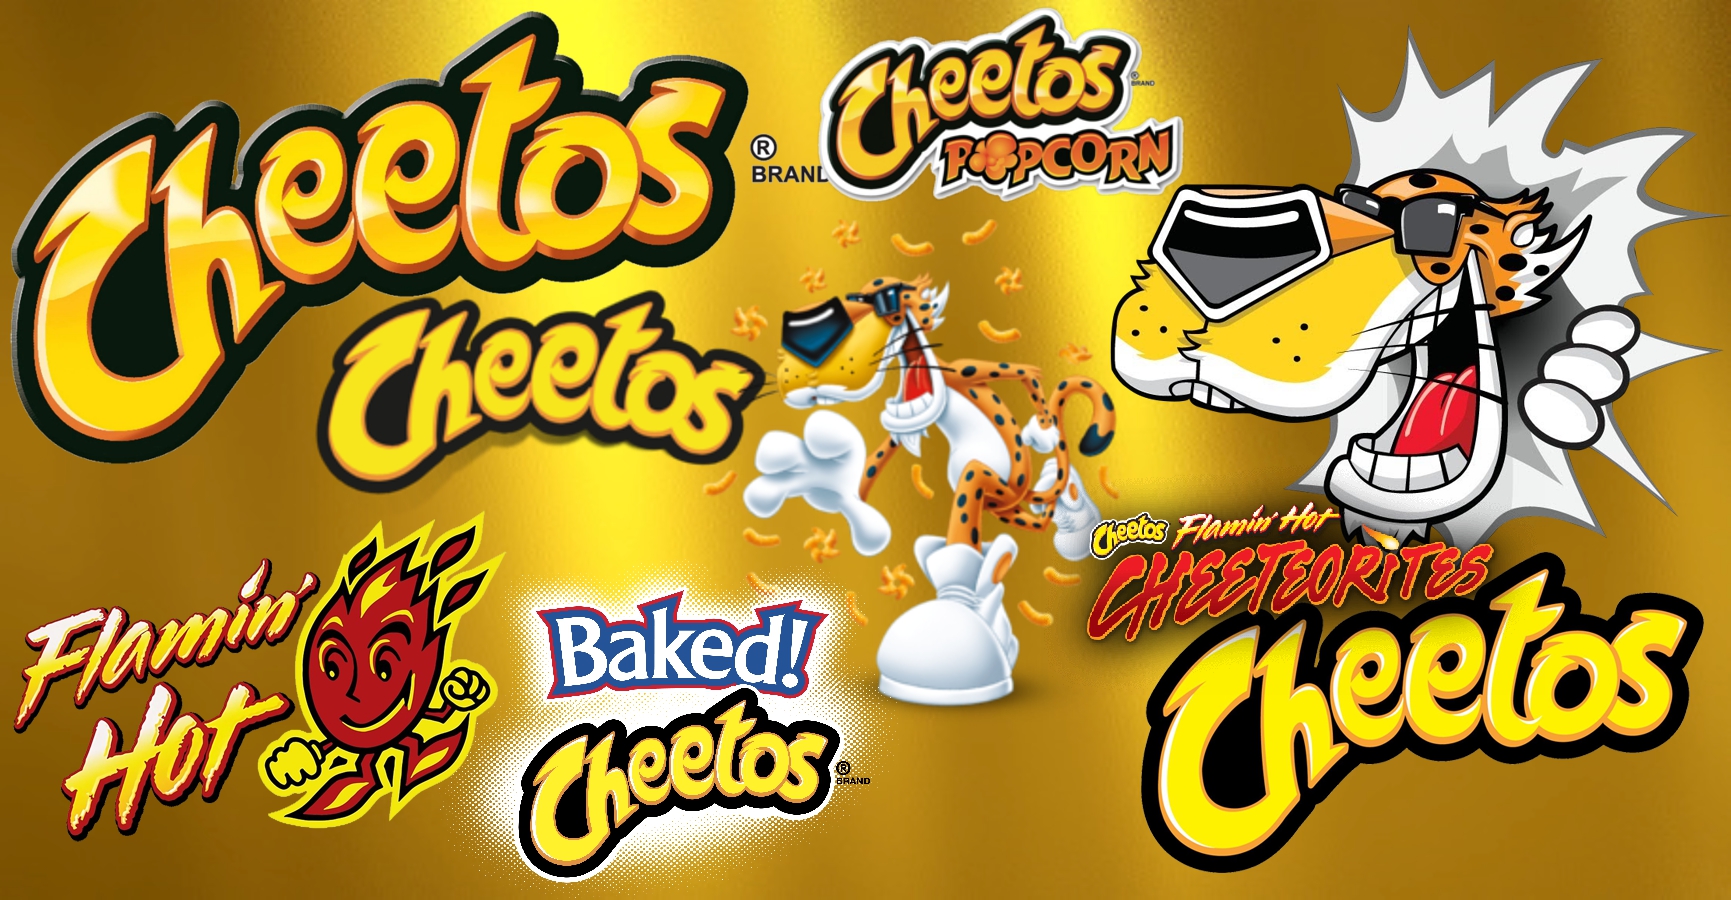 Cheetos logo.jpg